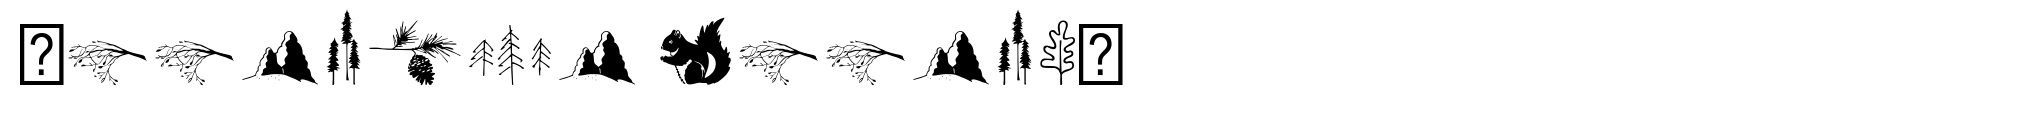 Woodland Doodles image